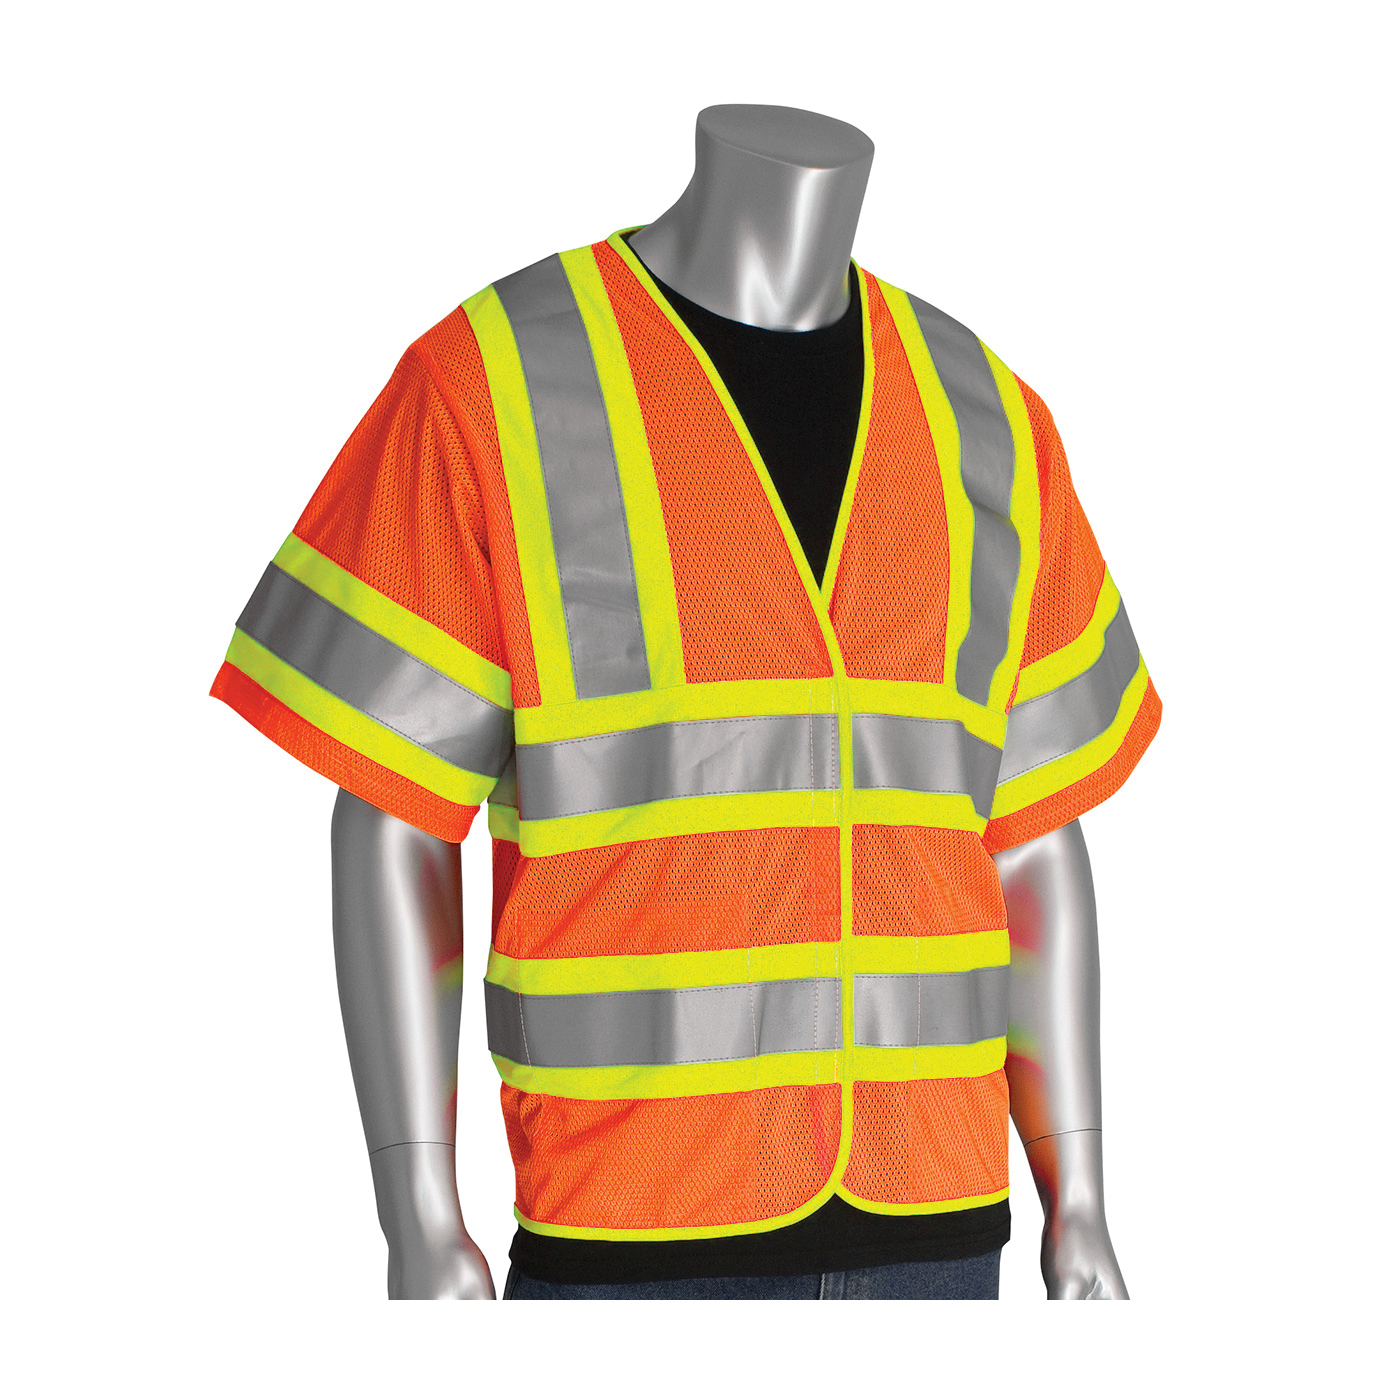 PIP® SafetyGear 305-HSVPFROR-S/M 2-Tone FR Treated Safety Vest, S to M, Hi-Viz Orange, Polyester, Hook and Loop Closure, 2 Pockets, ANSI Class: Class 3, ANSI Specified